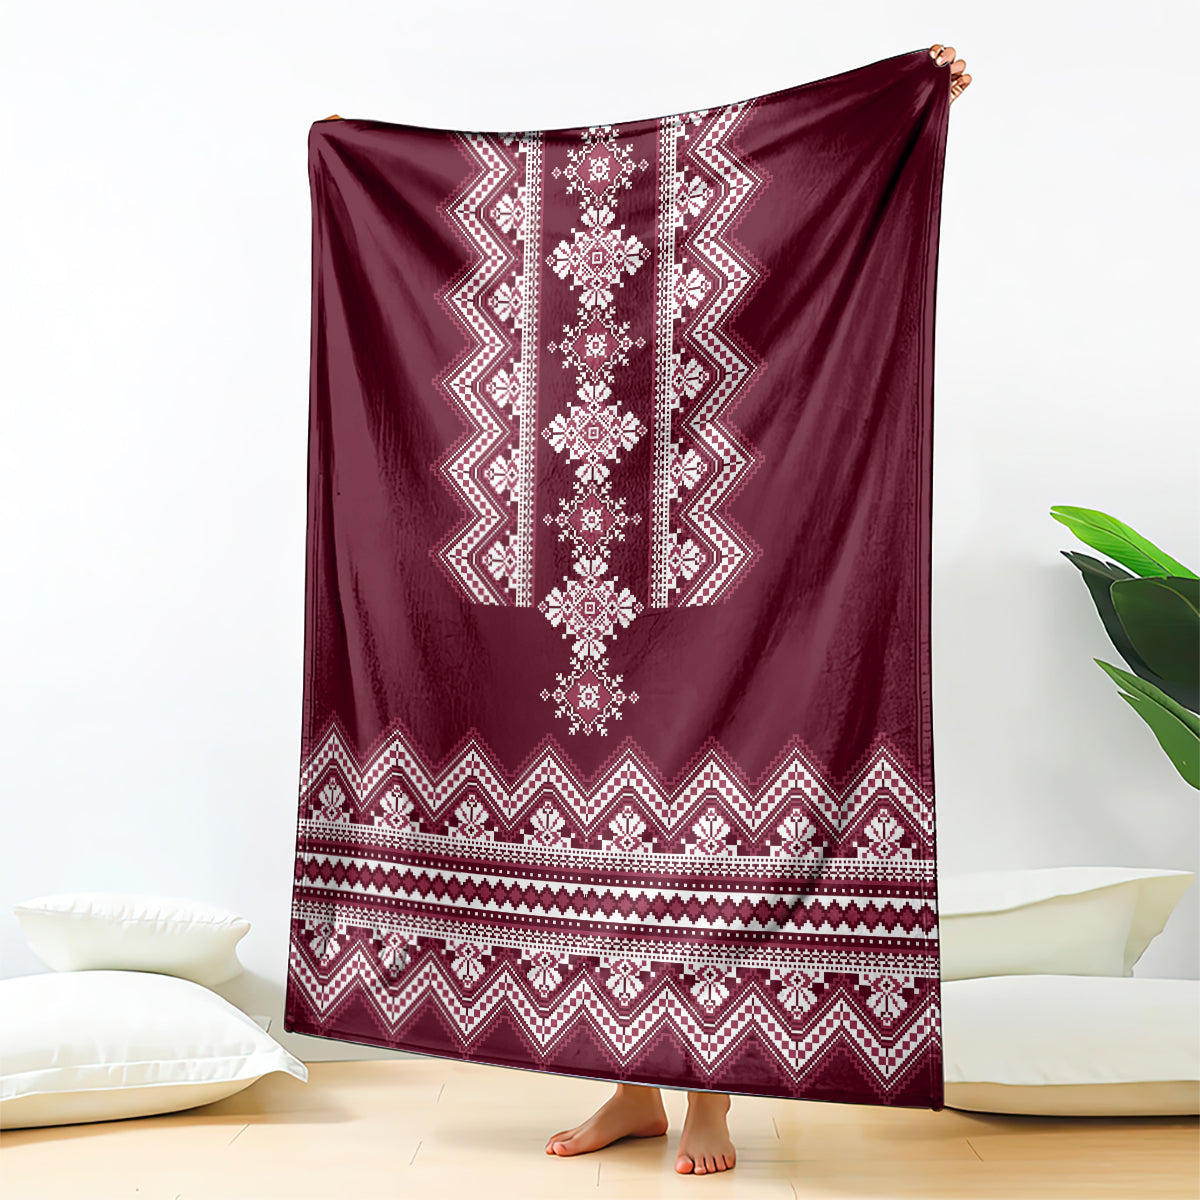 ukraine-folk-pattern-blanket-ukrainian-wine-red-version